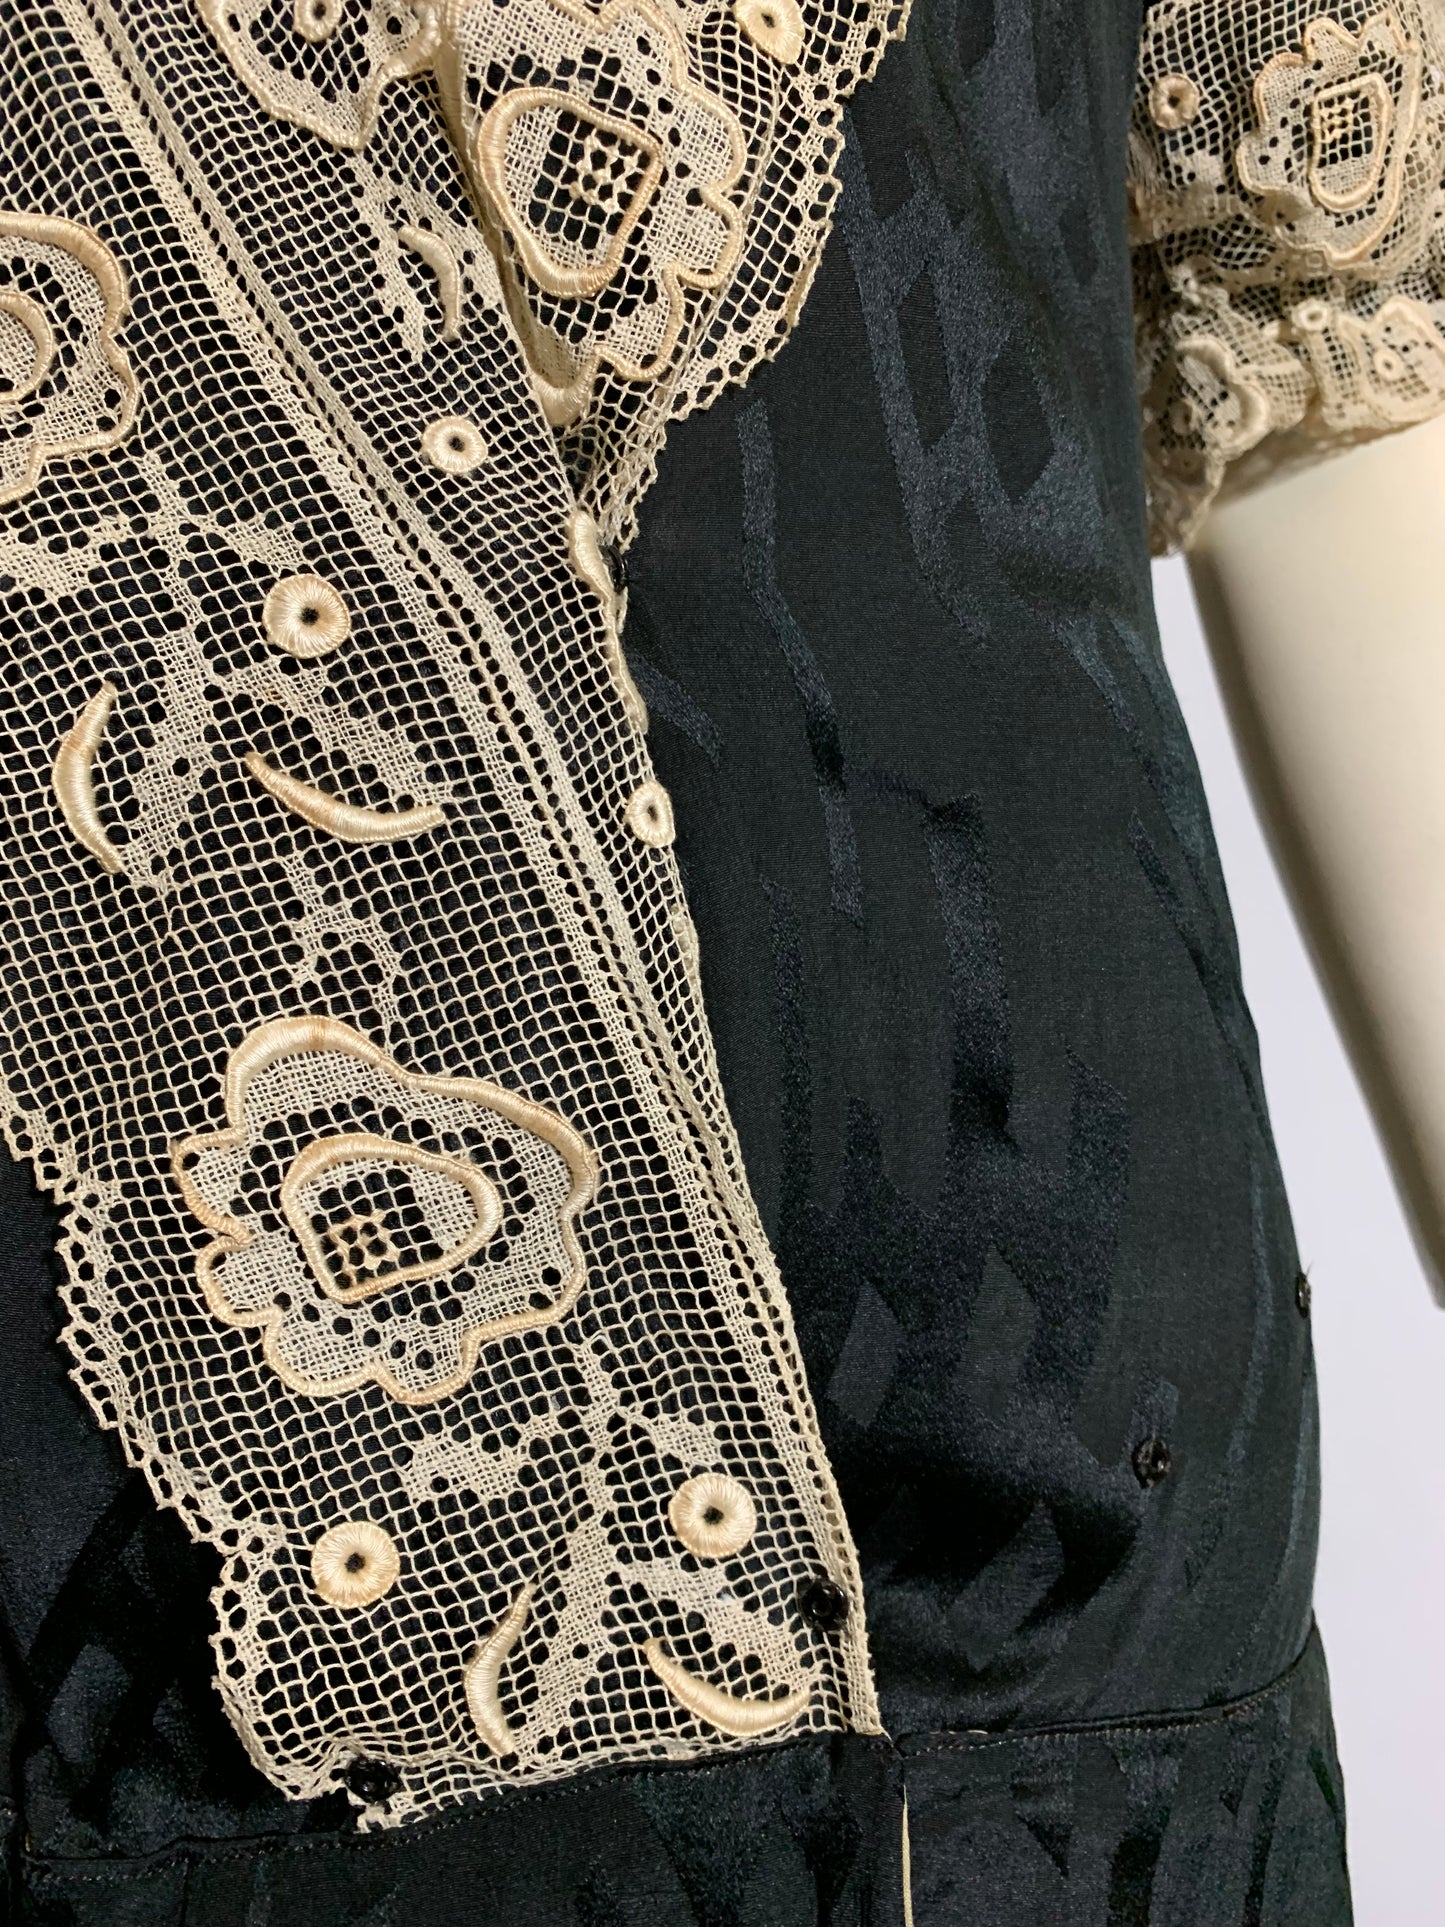 Black Silk Dropped Waist Dress with Wide Lace Trim circa 1920s